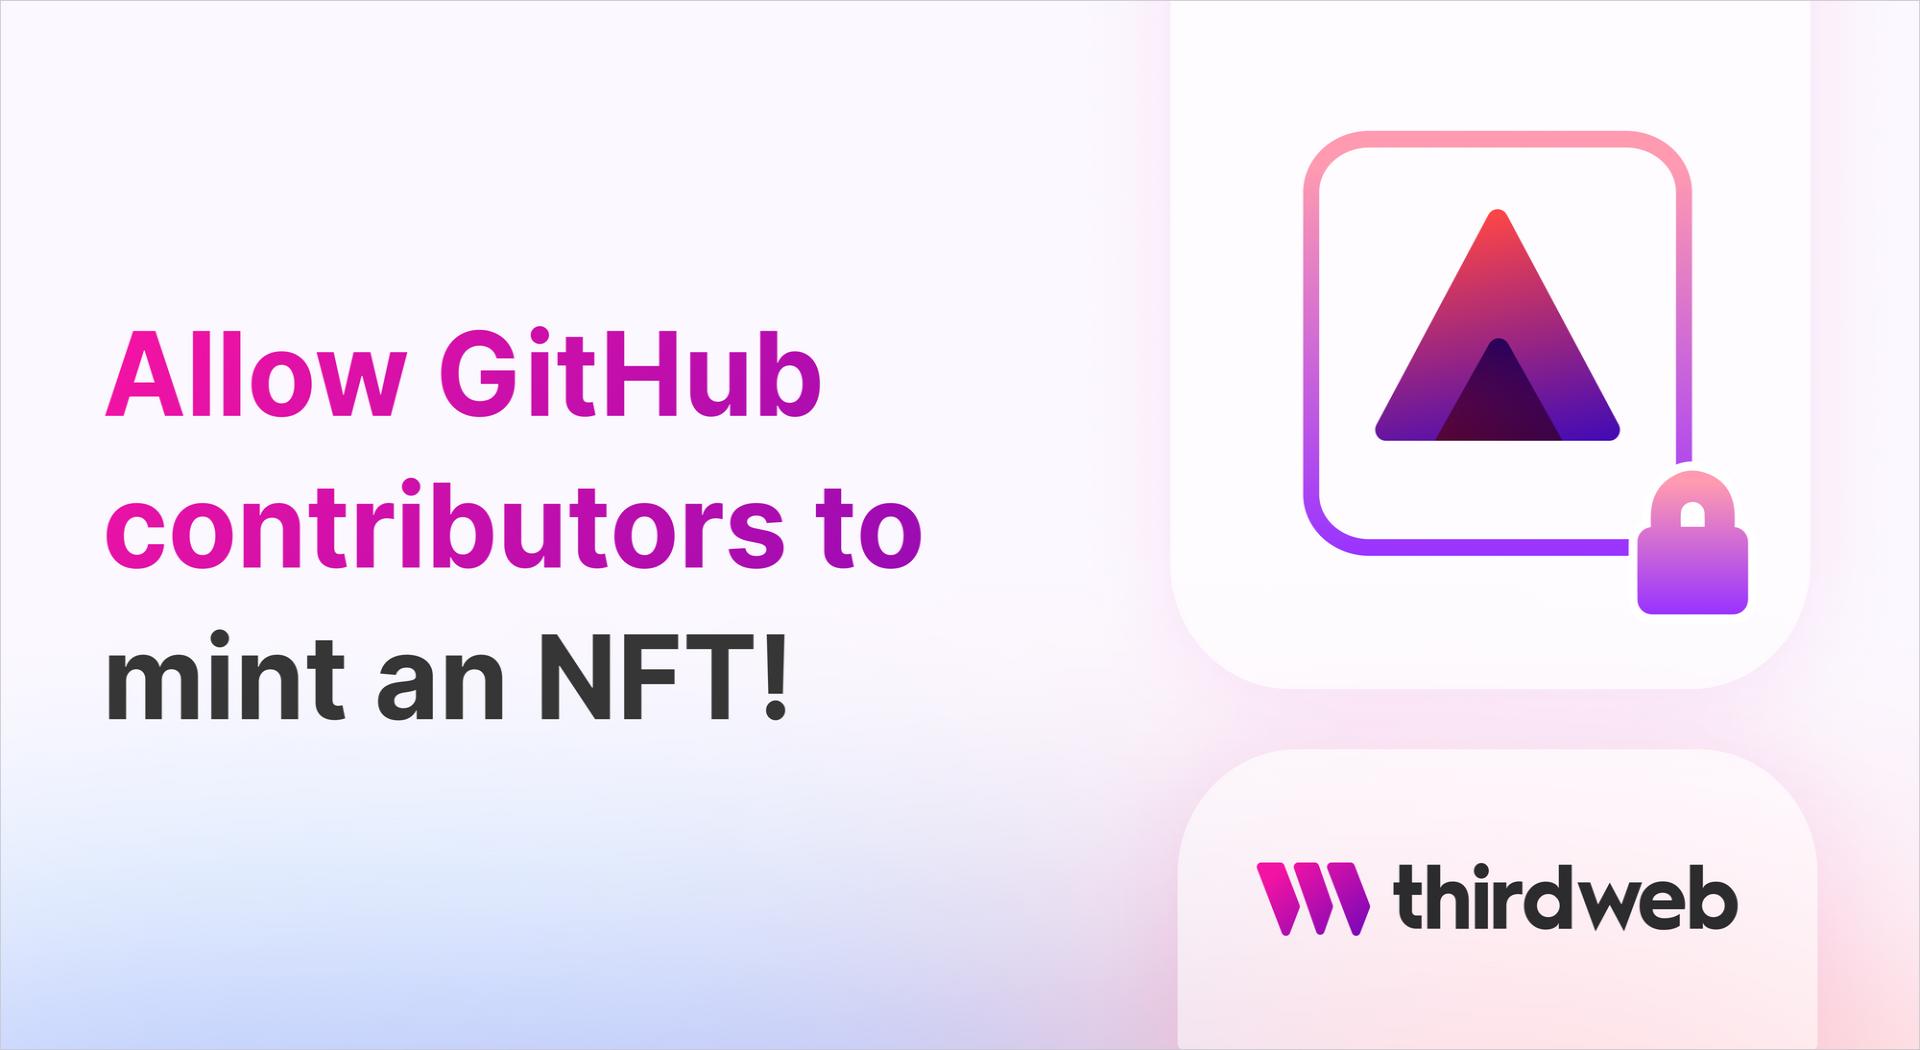 Allow GitHub contributors to mint an NFT